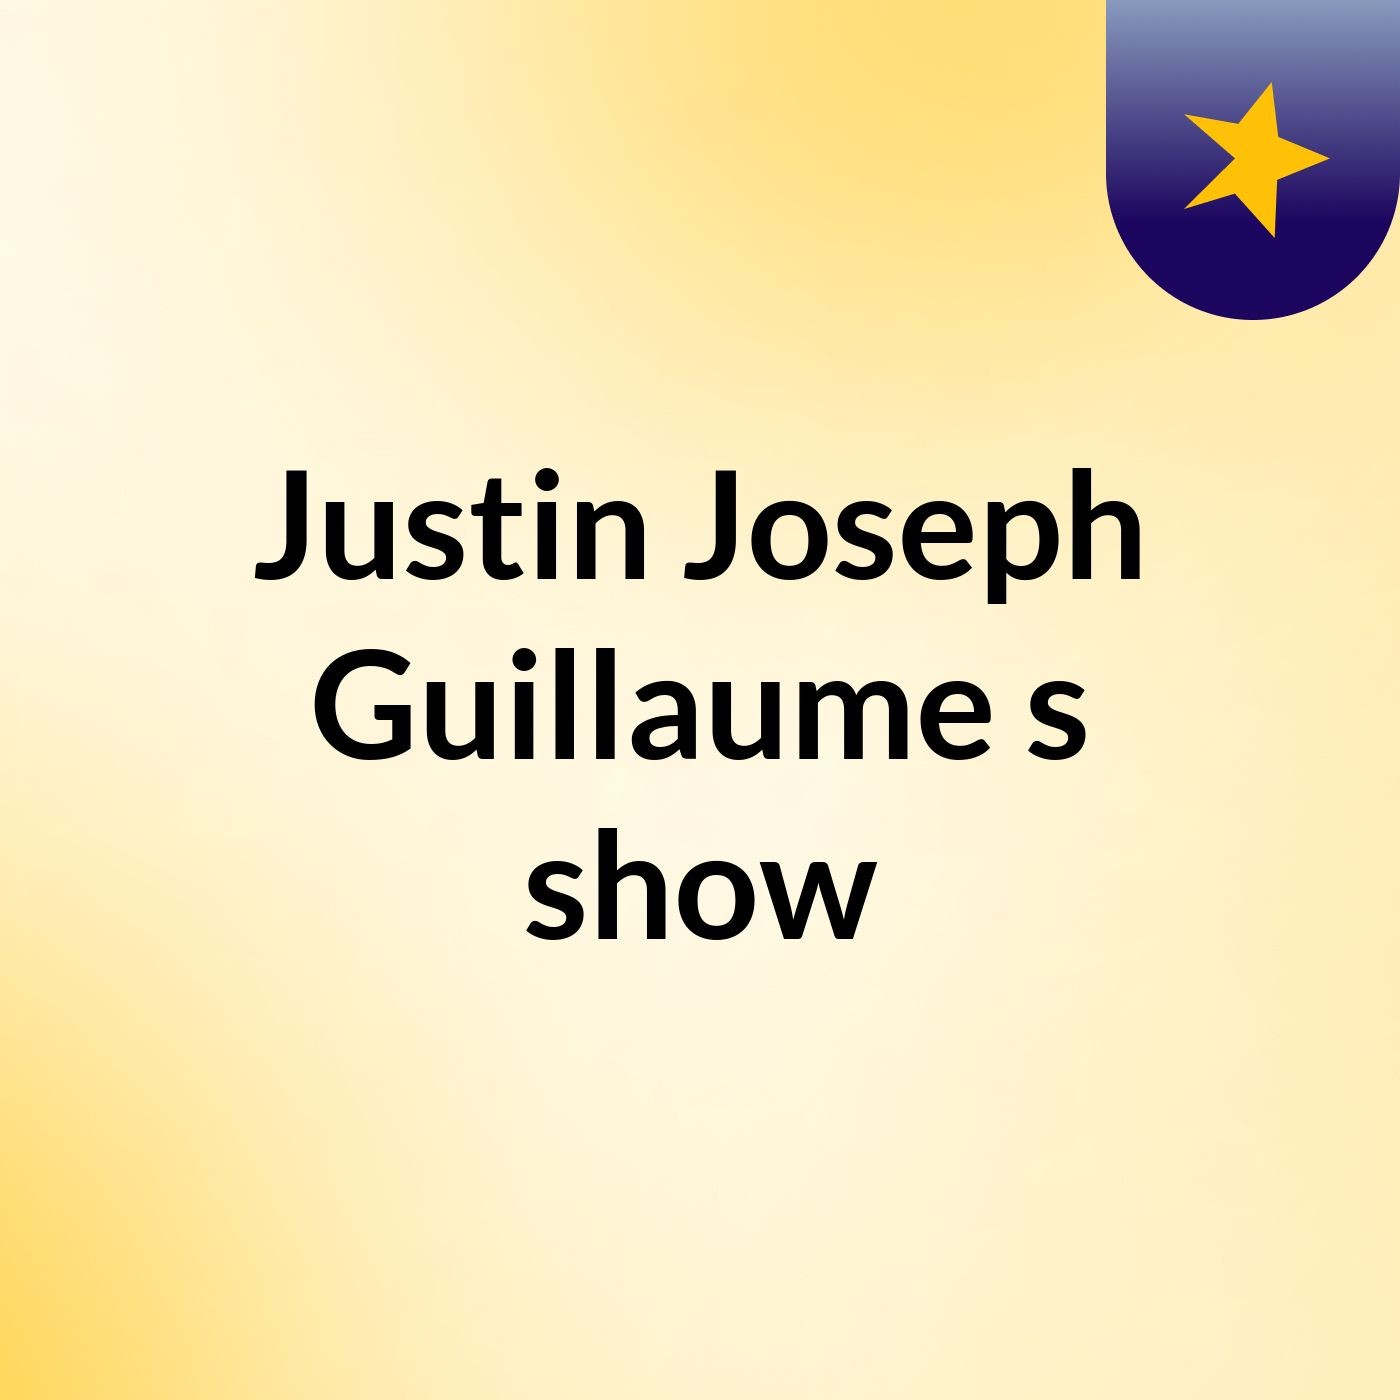 Justin Joseph Guillaume's show